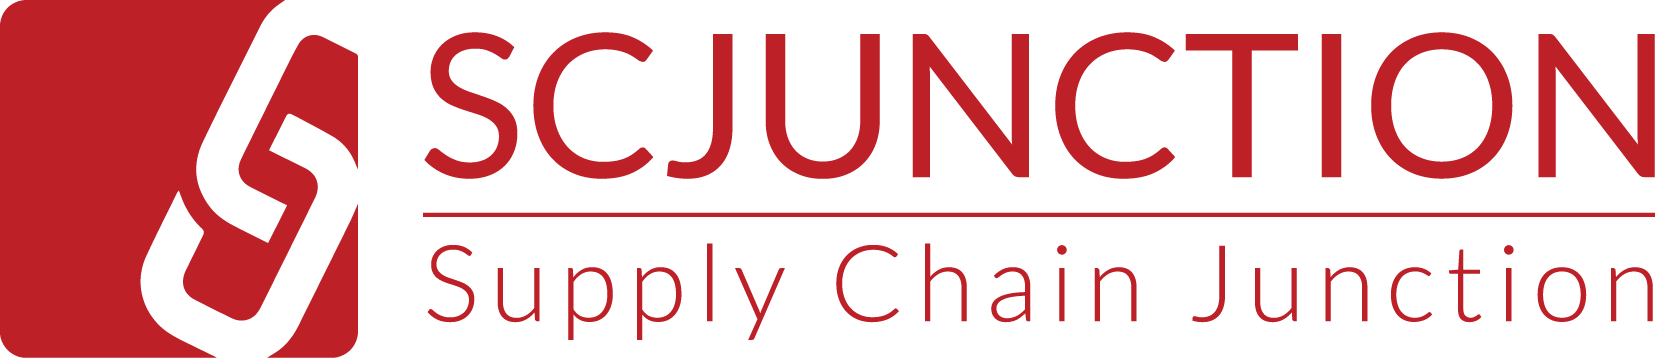 supply_chain_junction_logo